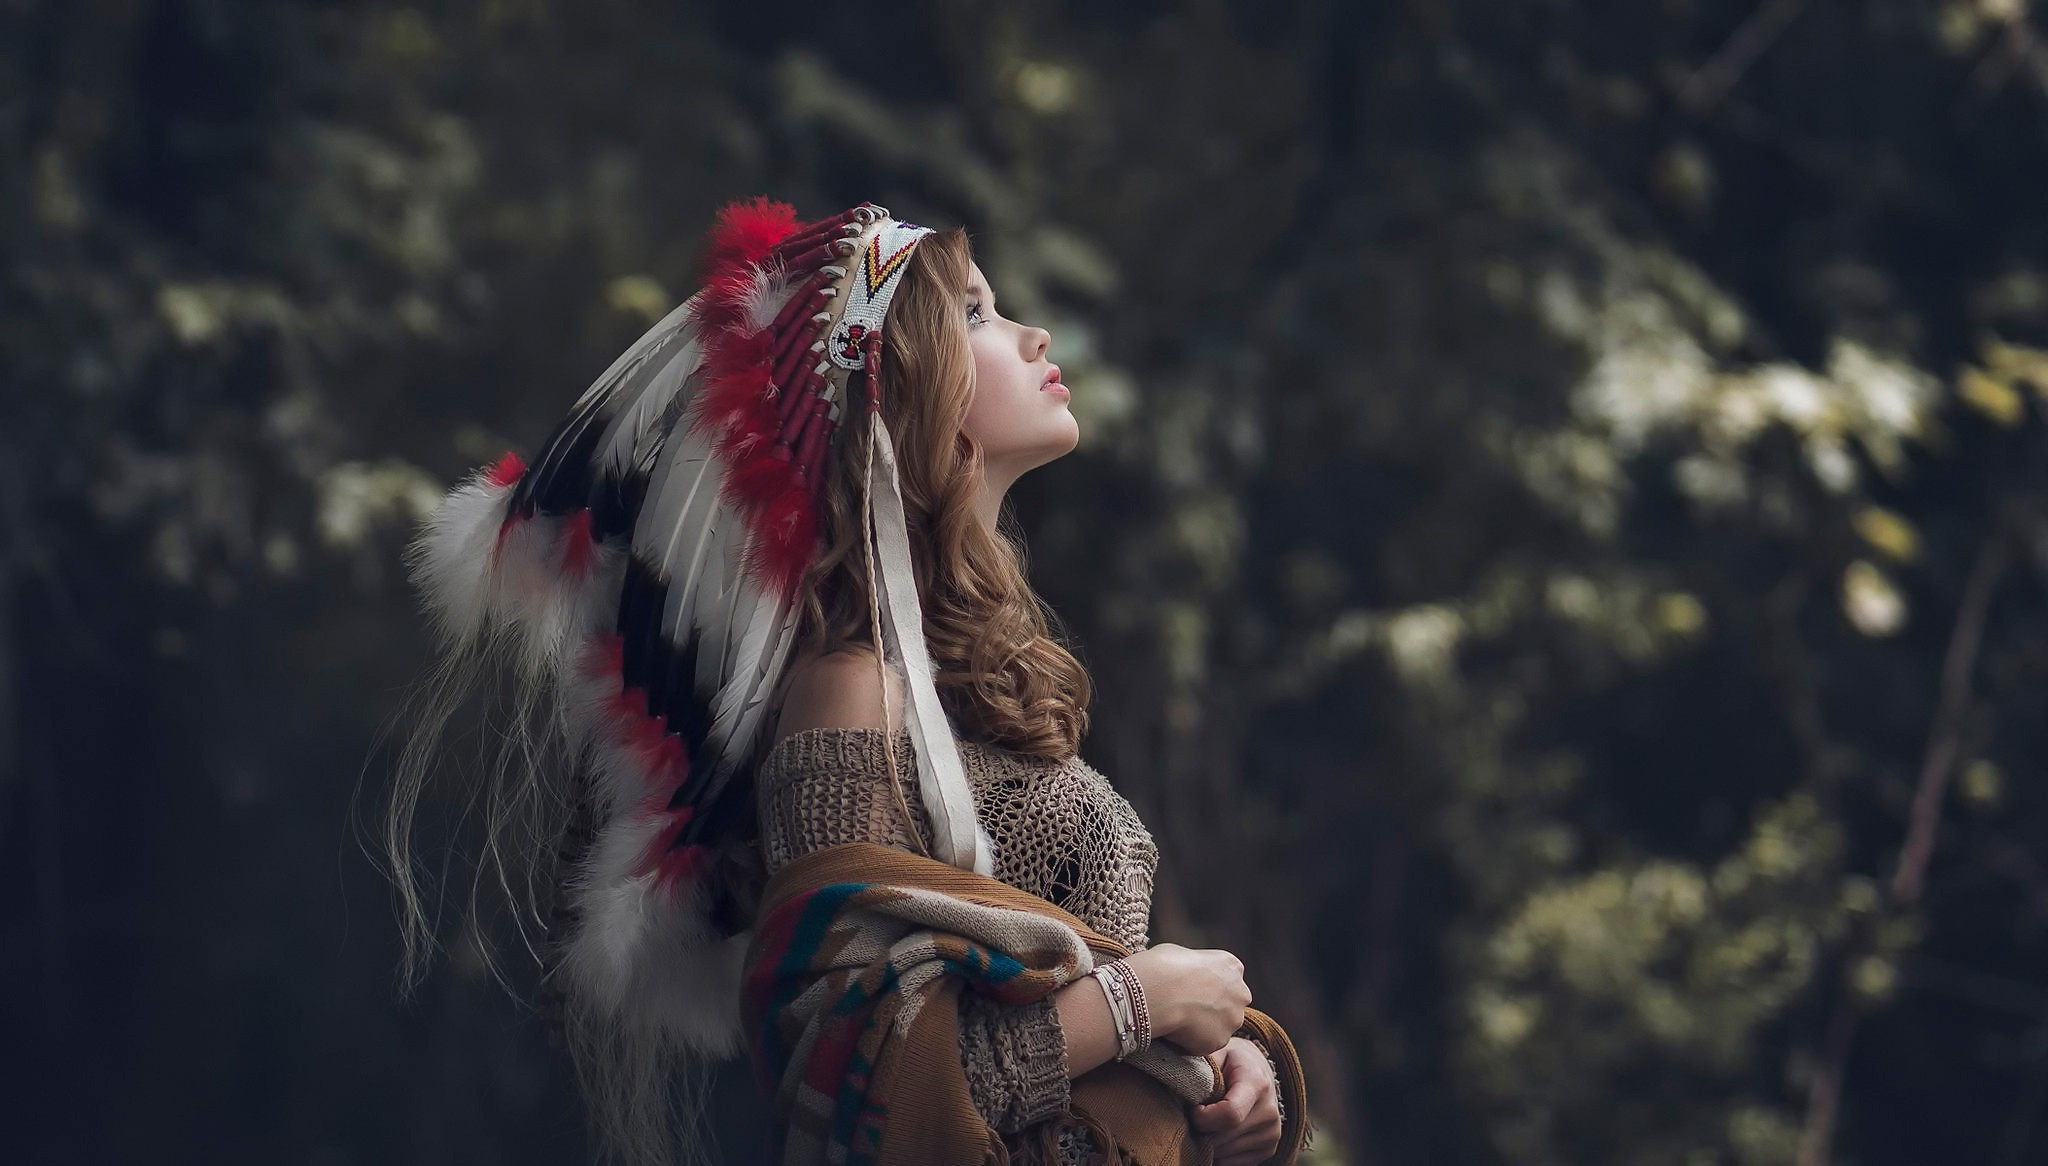 native american hd wallpaper,hair,red,beauty,eye,long hair